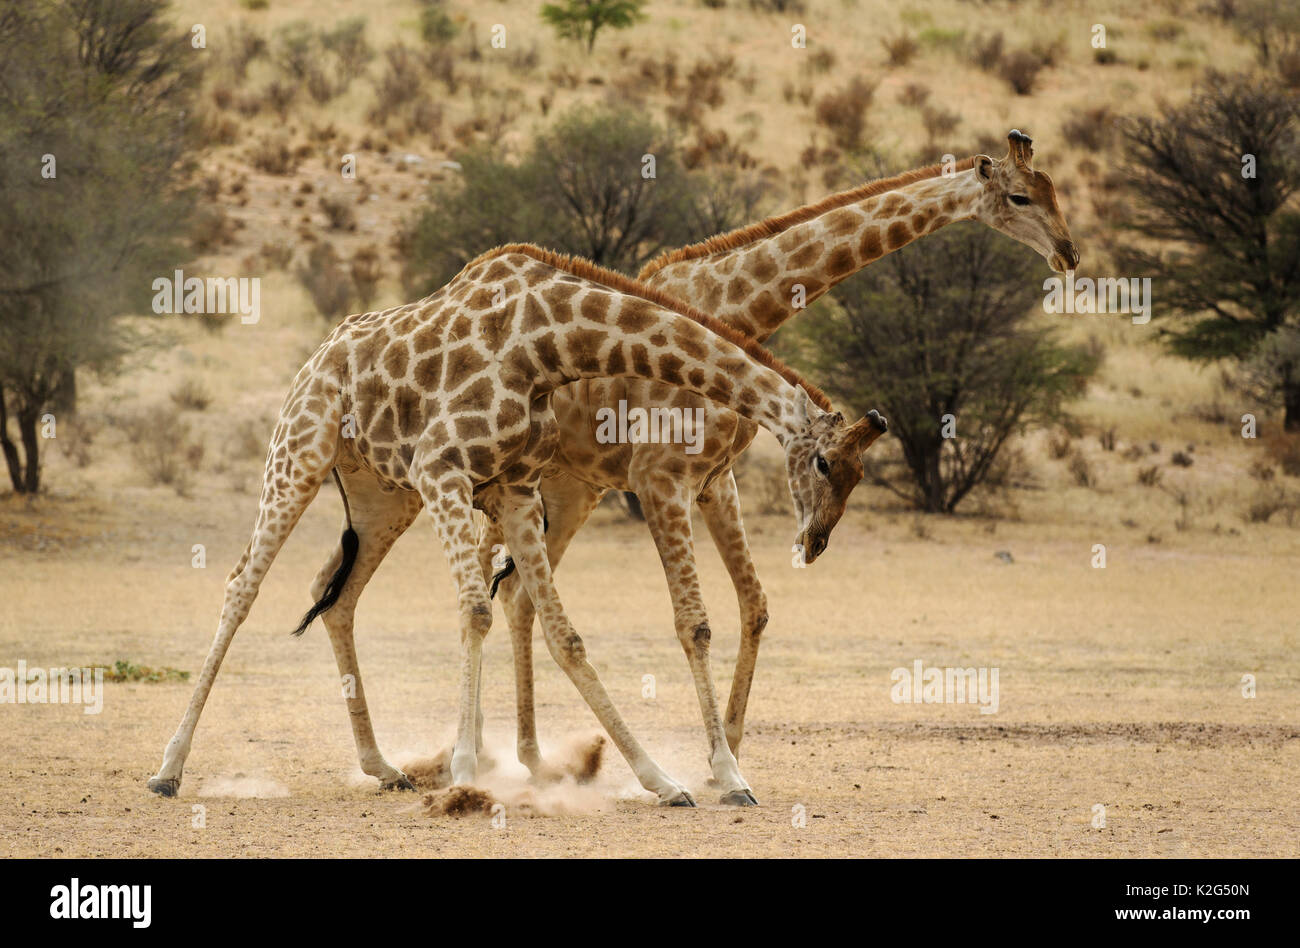 Südliche Giraffe (Giraffa giraffa). Männer in der trockenen Auob am frühen Morgen Riverbed kämpfen. Kalahari Wüste, Kgalagadi Transfrontier Park, Südafrika. Stockfoto